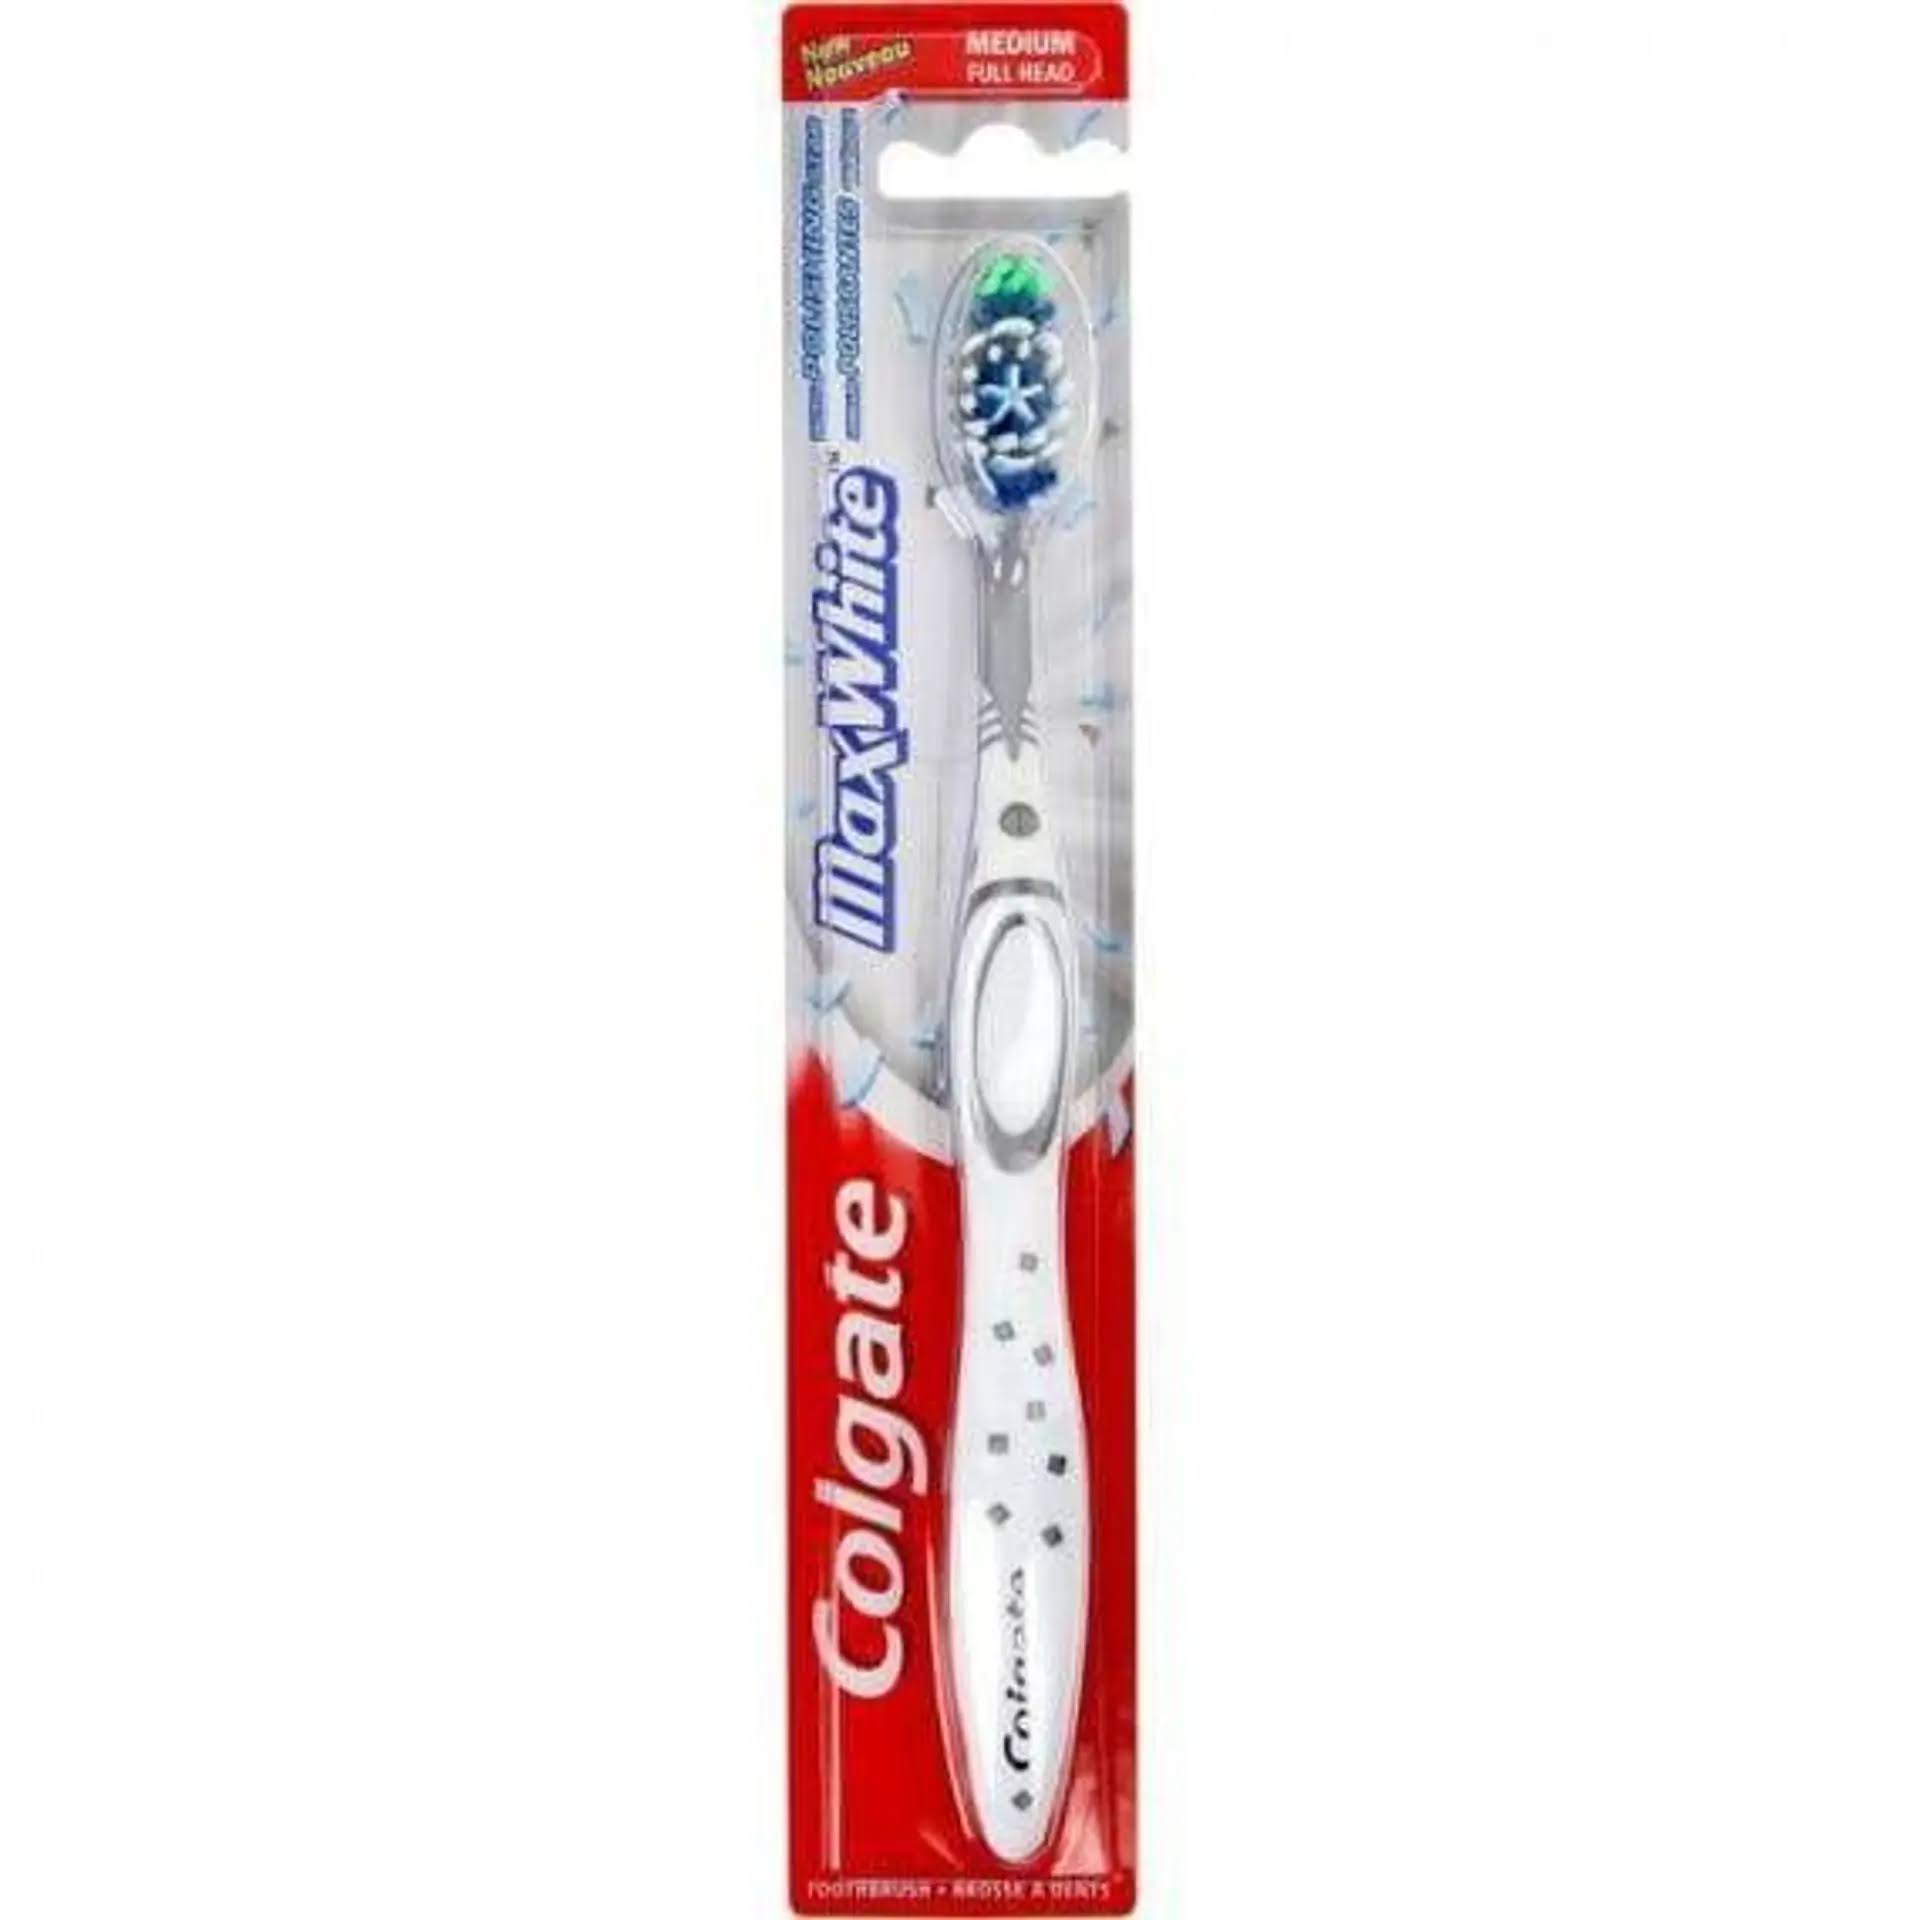 Colgate Toothbrush Max White Medium